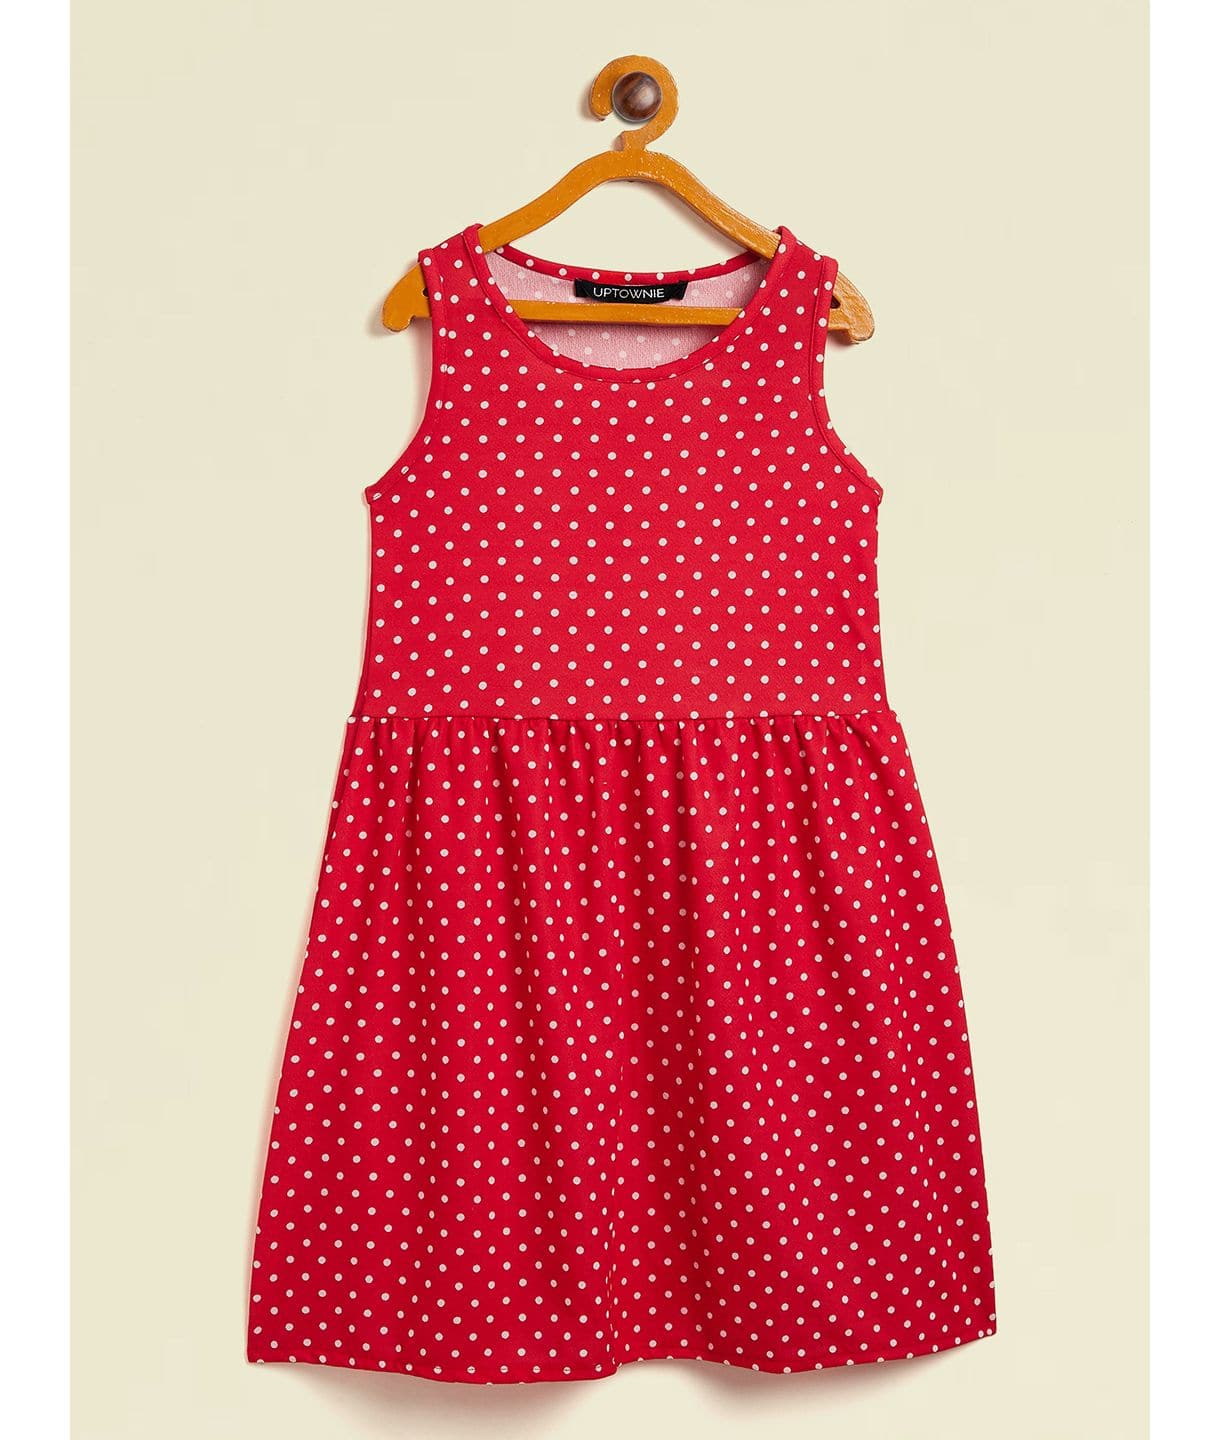 Polka Print Cotton Sleeveless Dress for Girls - Uptownie